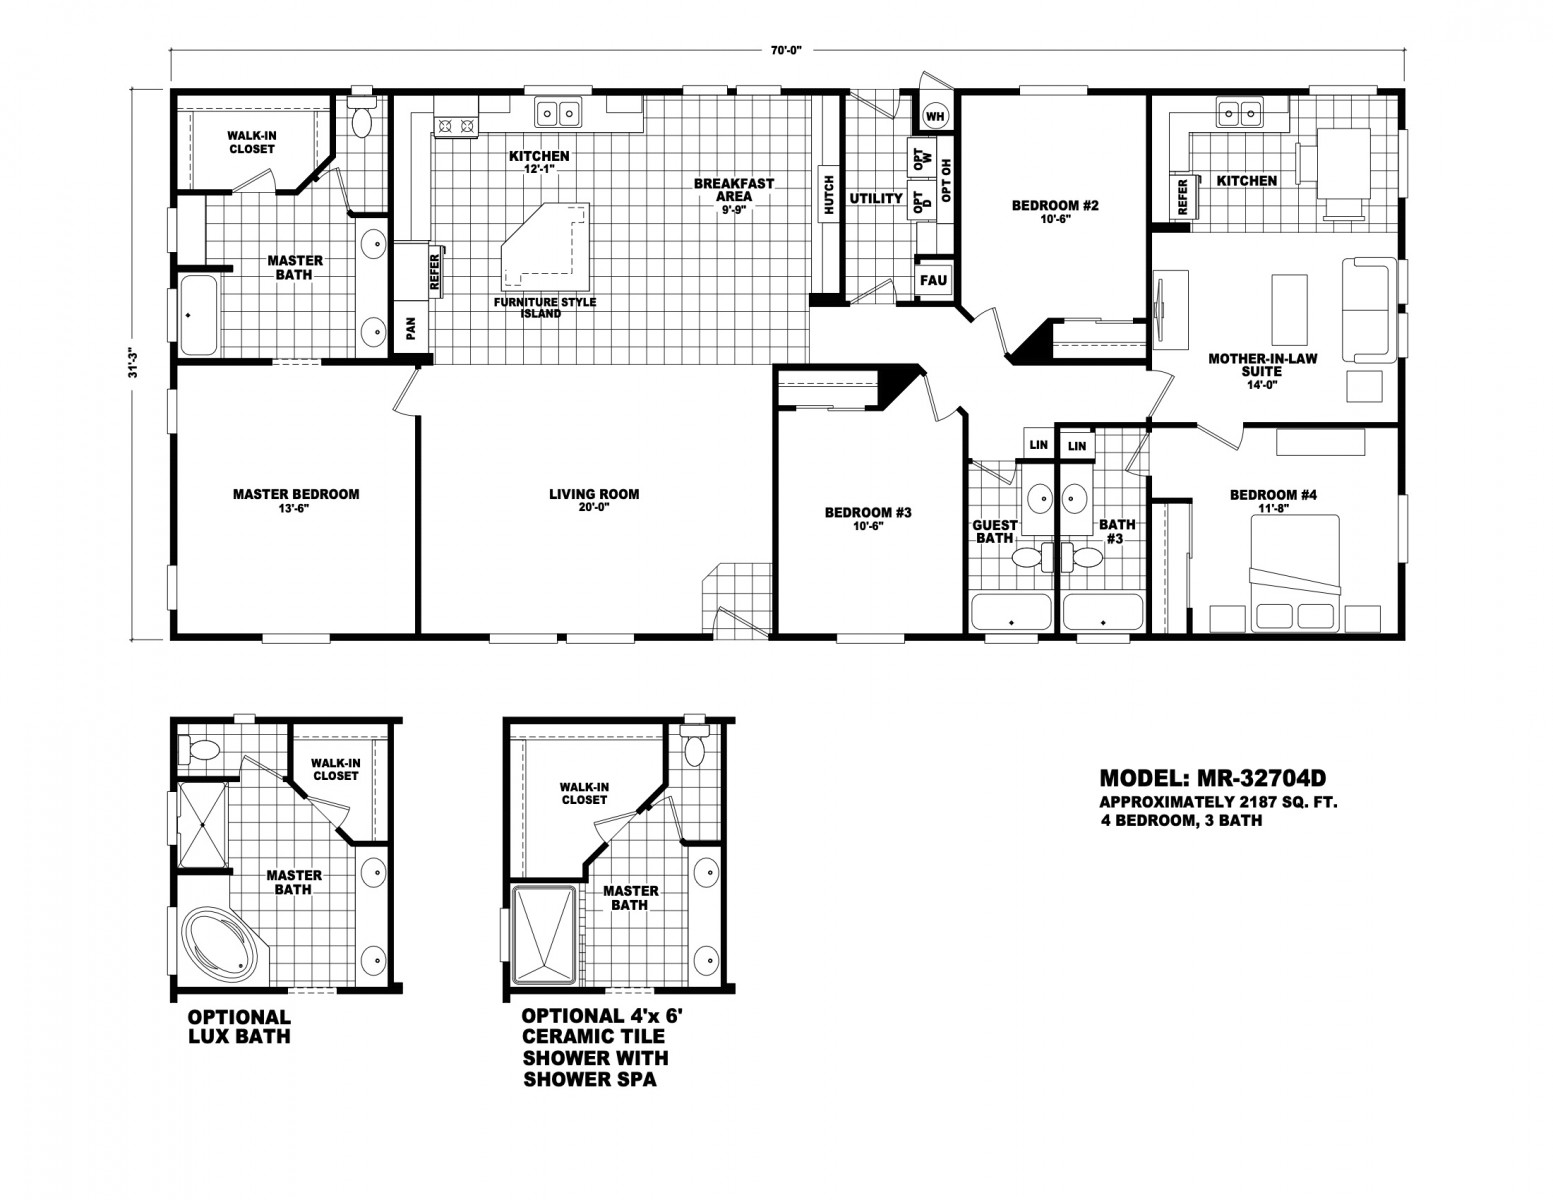 Homes Direct Modular Homes - Model MR32704D - Floorplan